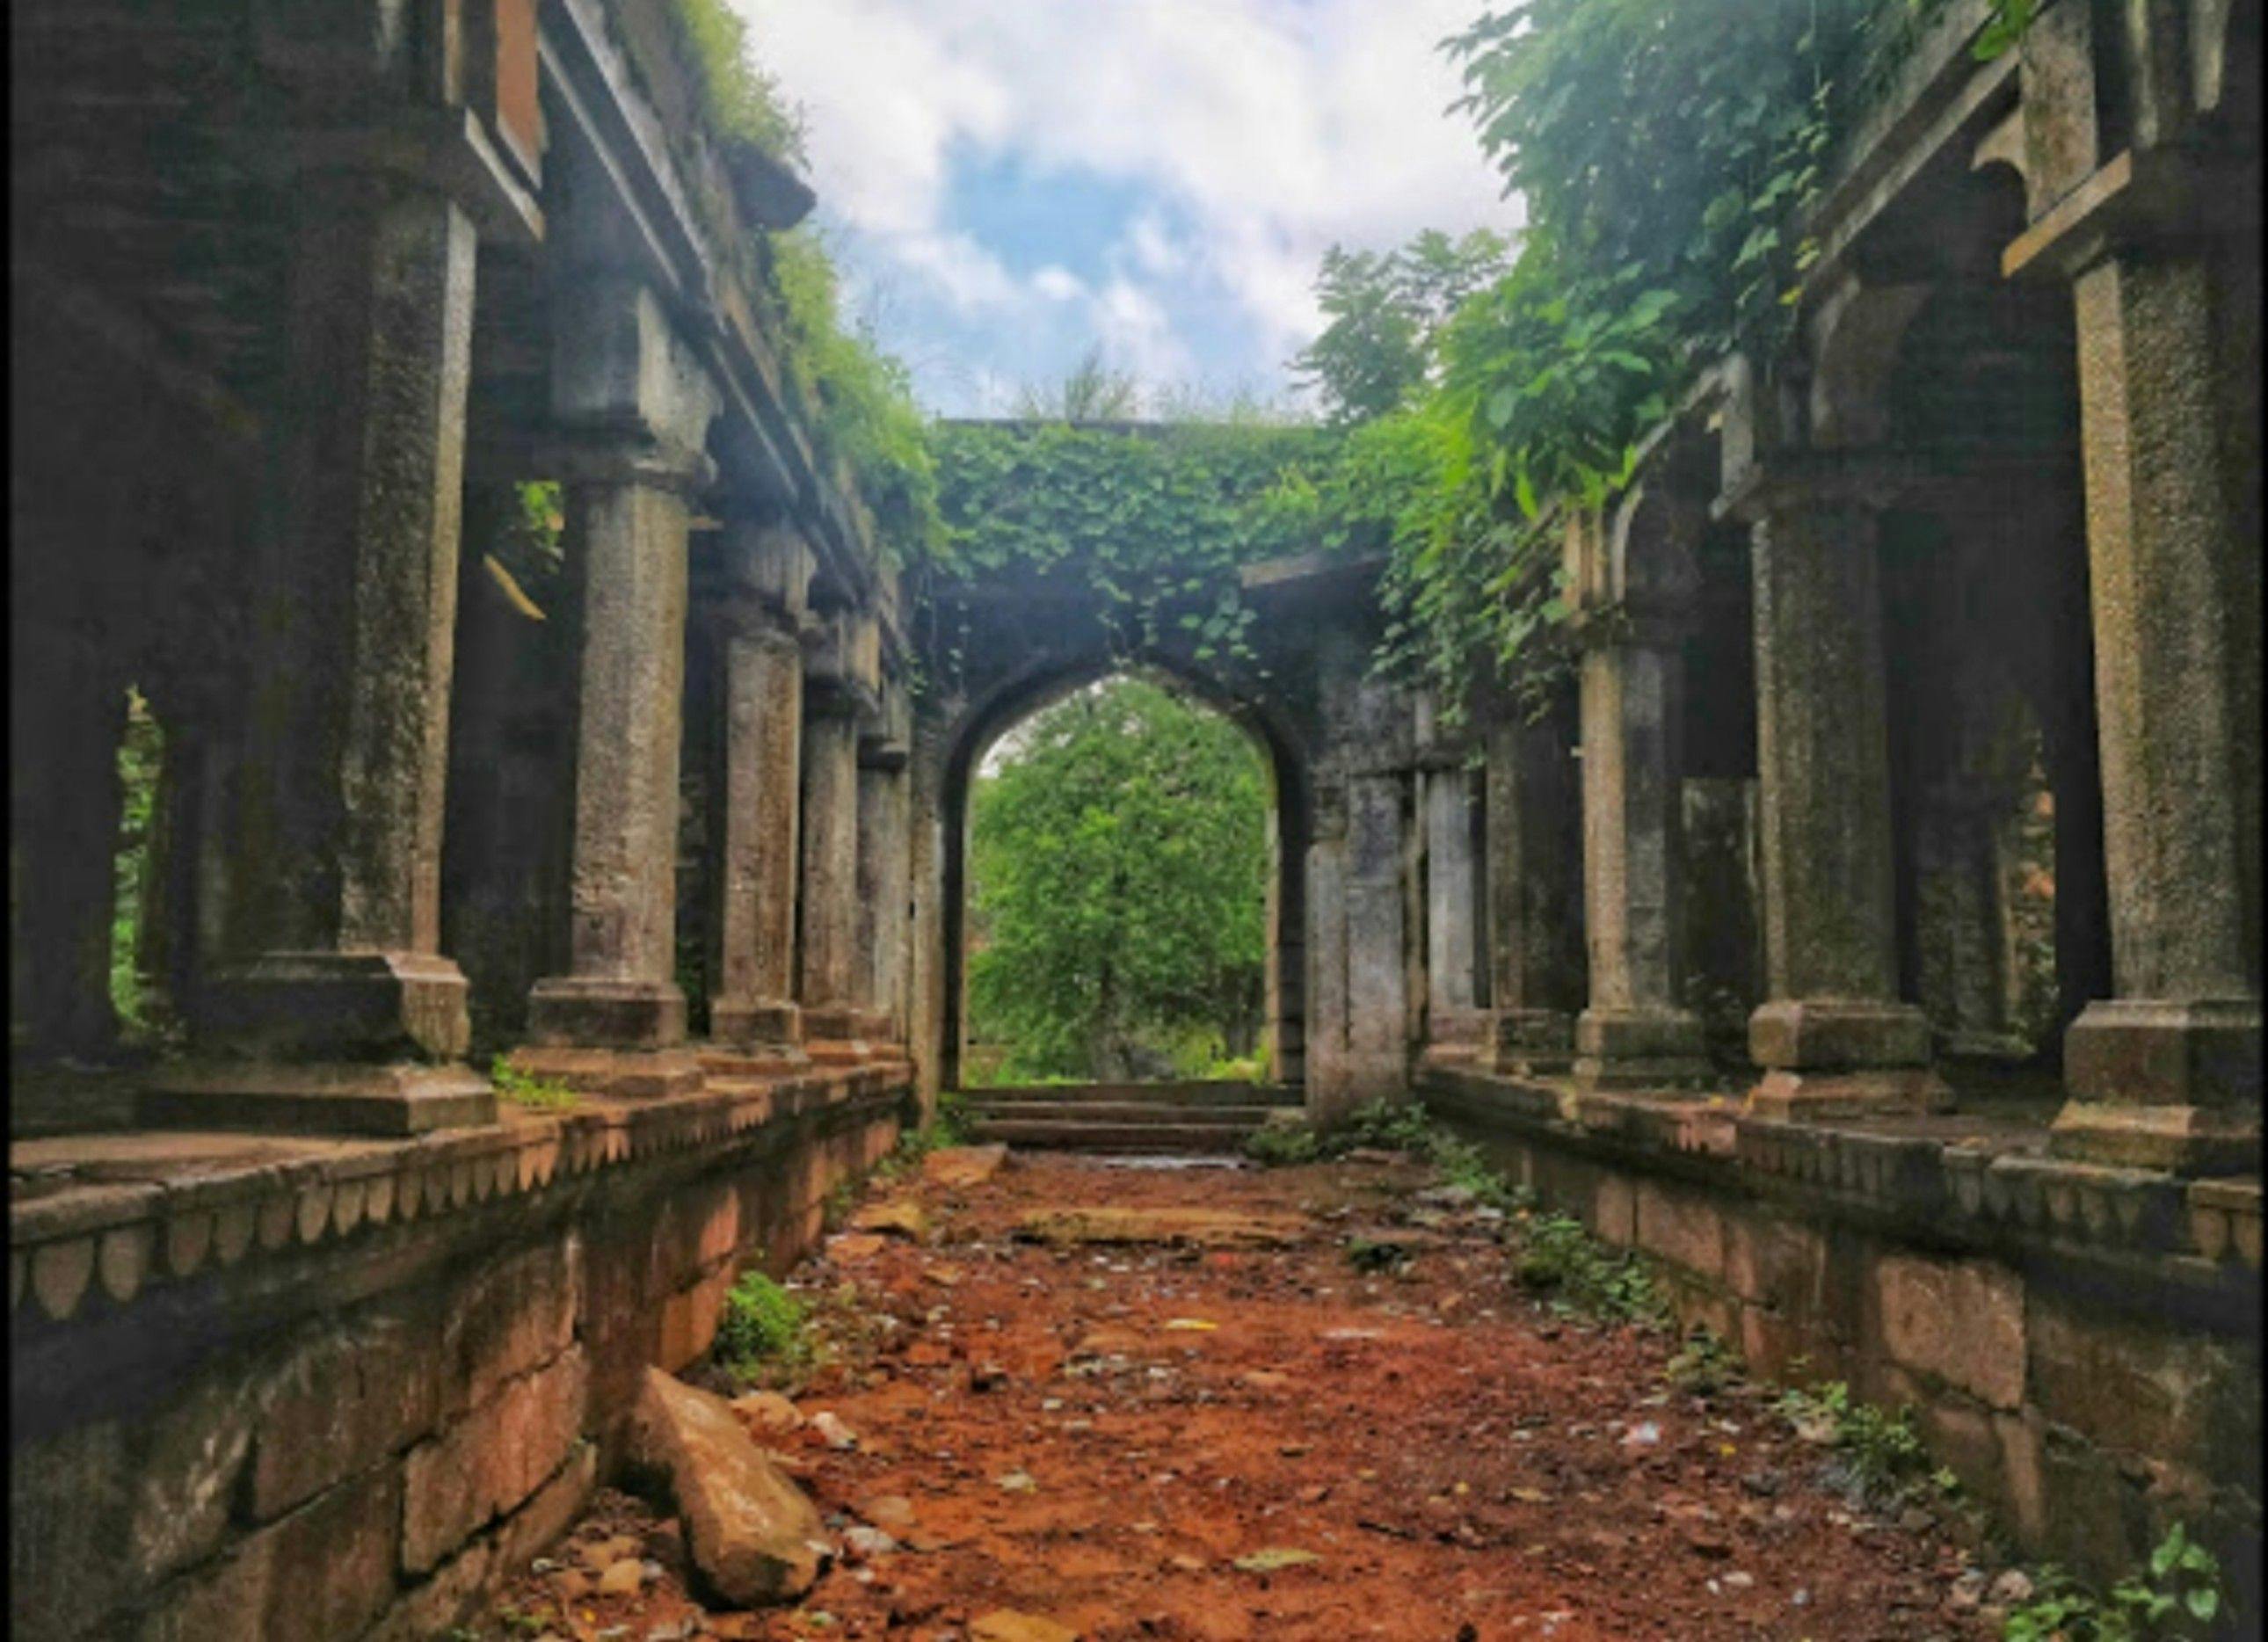 Remains of the Kutchery (court room) in Vijaygarh Fort